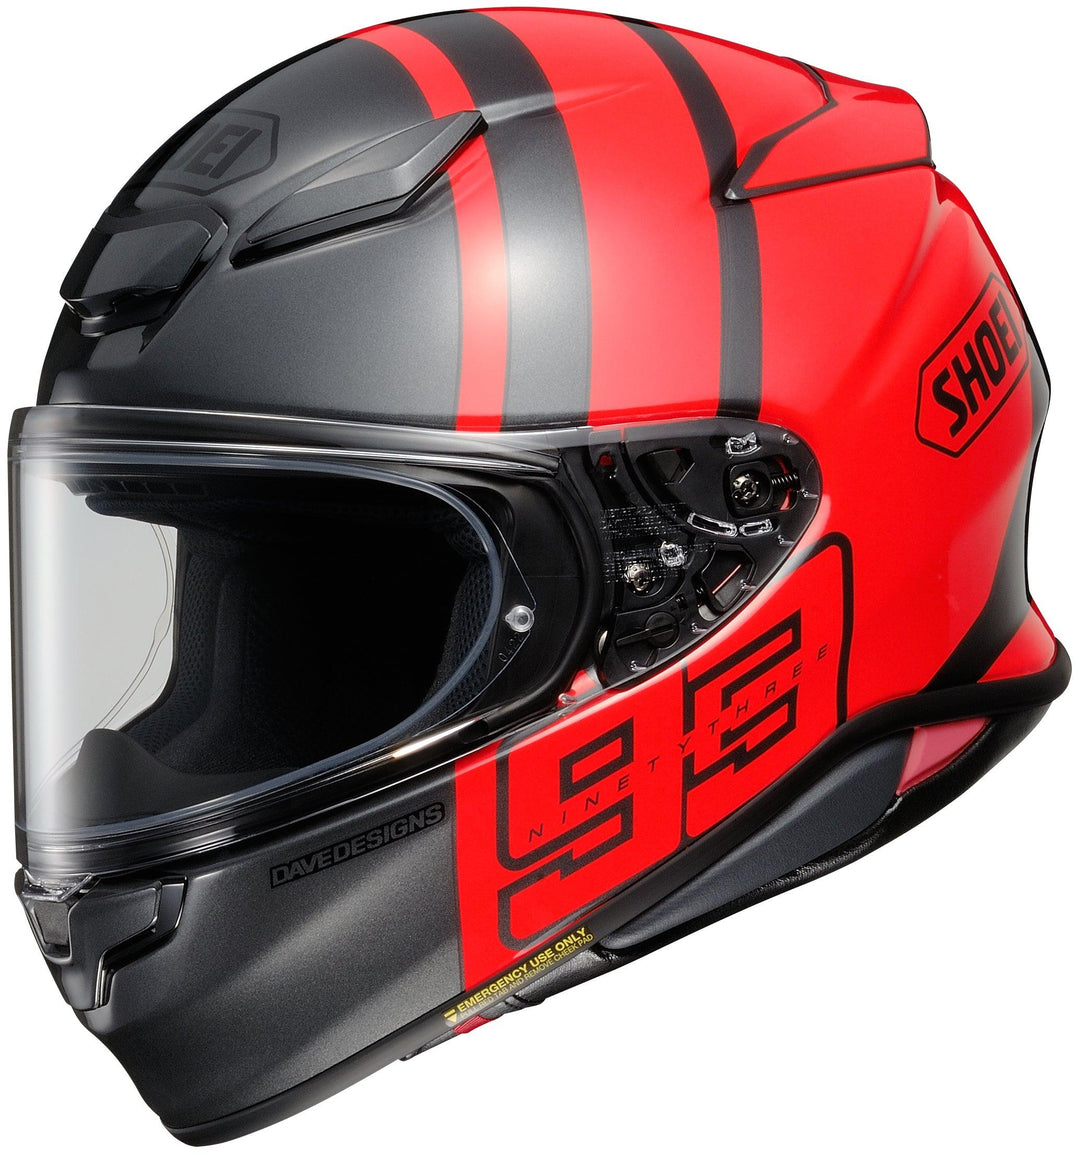 Shoei RF-1400 MM93 Collection Track Helmet - TC-1 Red/Black - Motor Psycho Sport